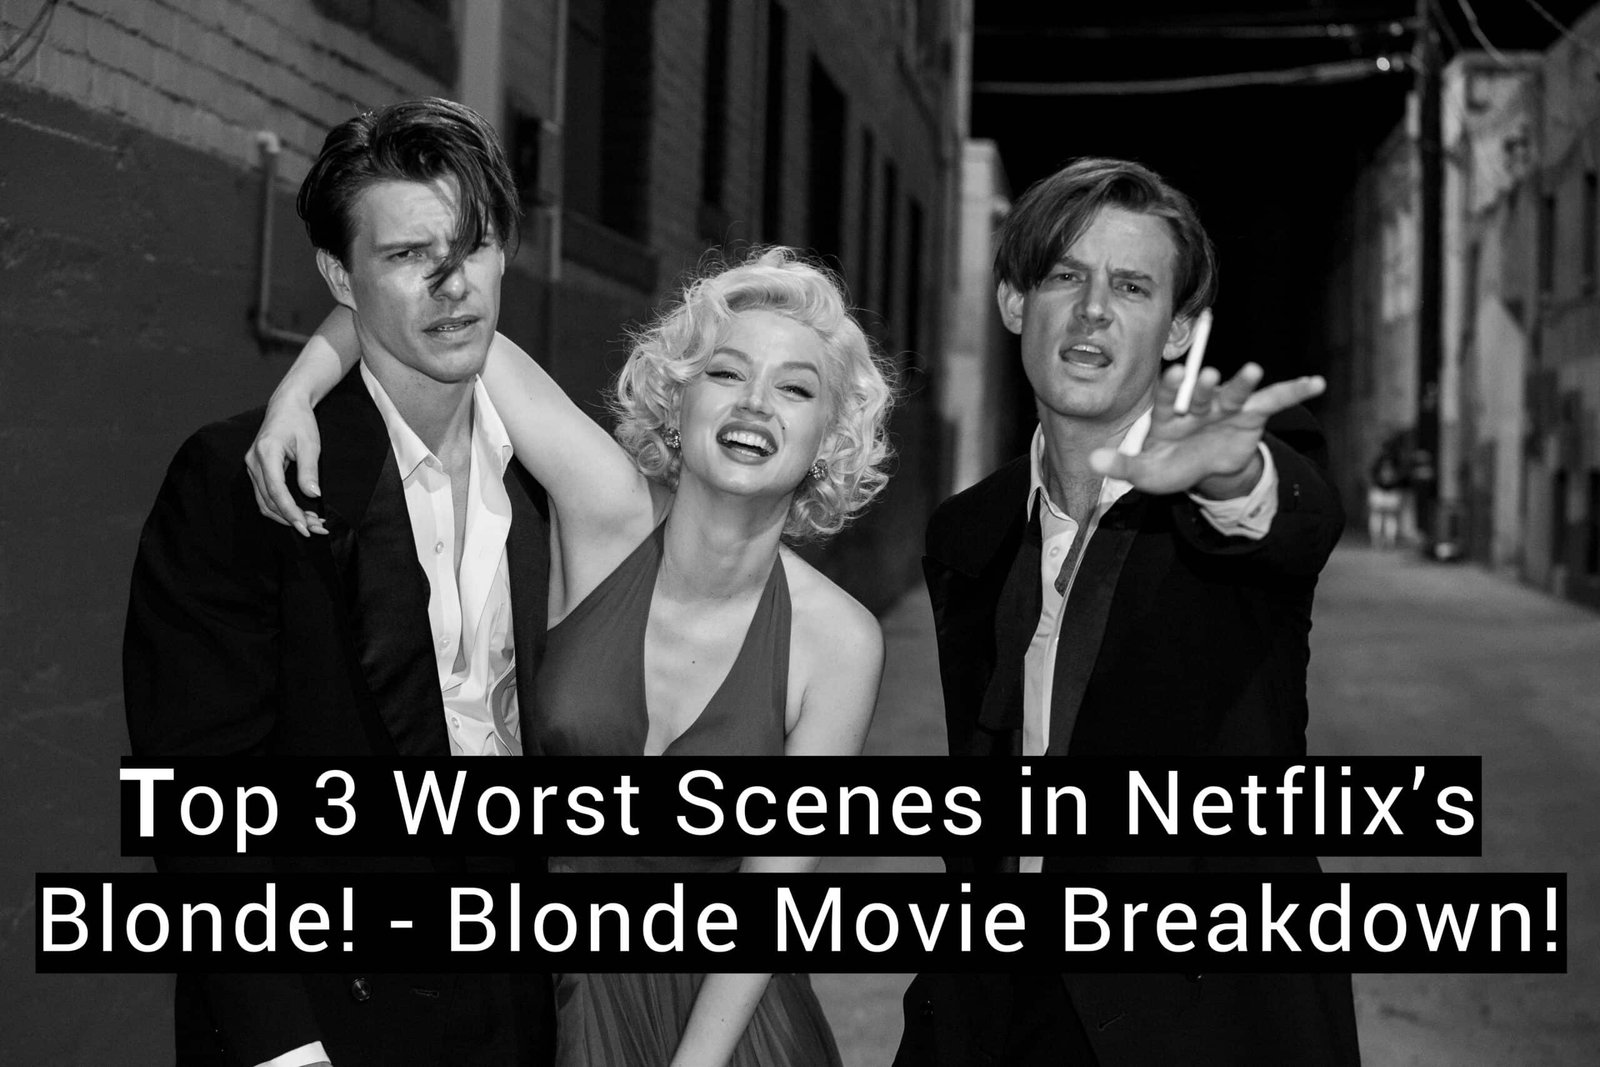 Top 3 Worst Scenes in Netflix’s Blonde! - Blonde Movie Breakdown!